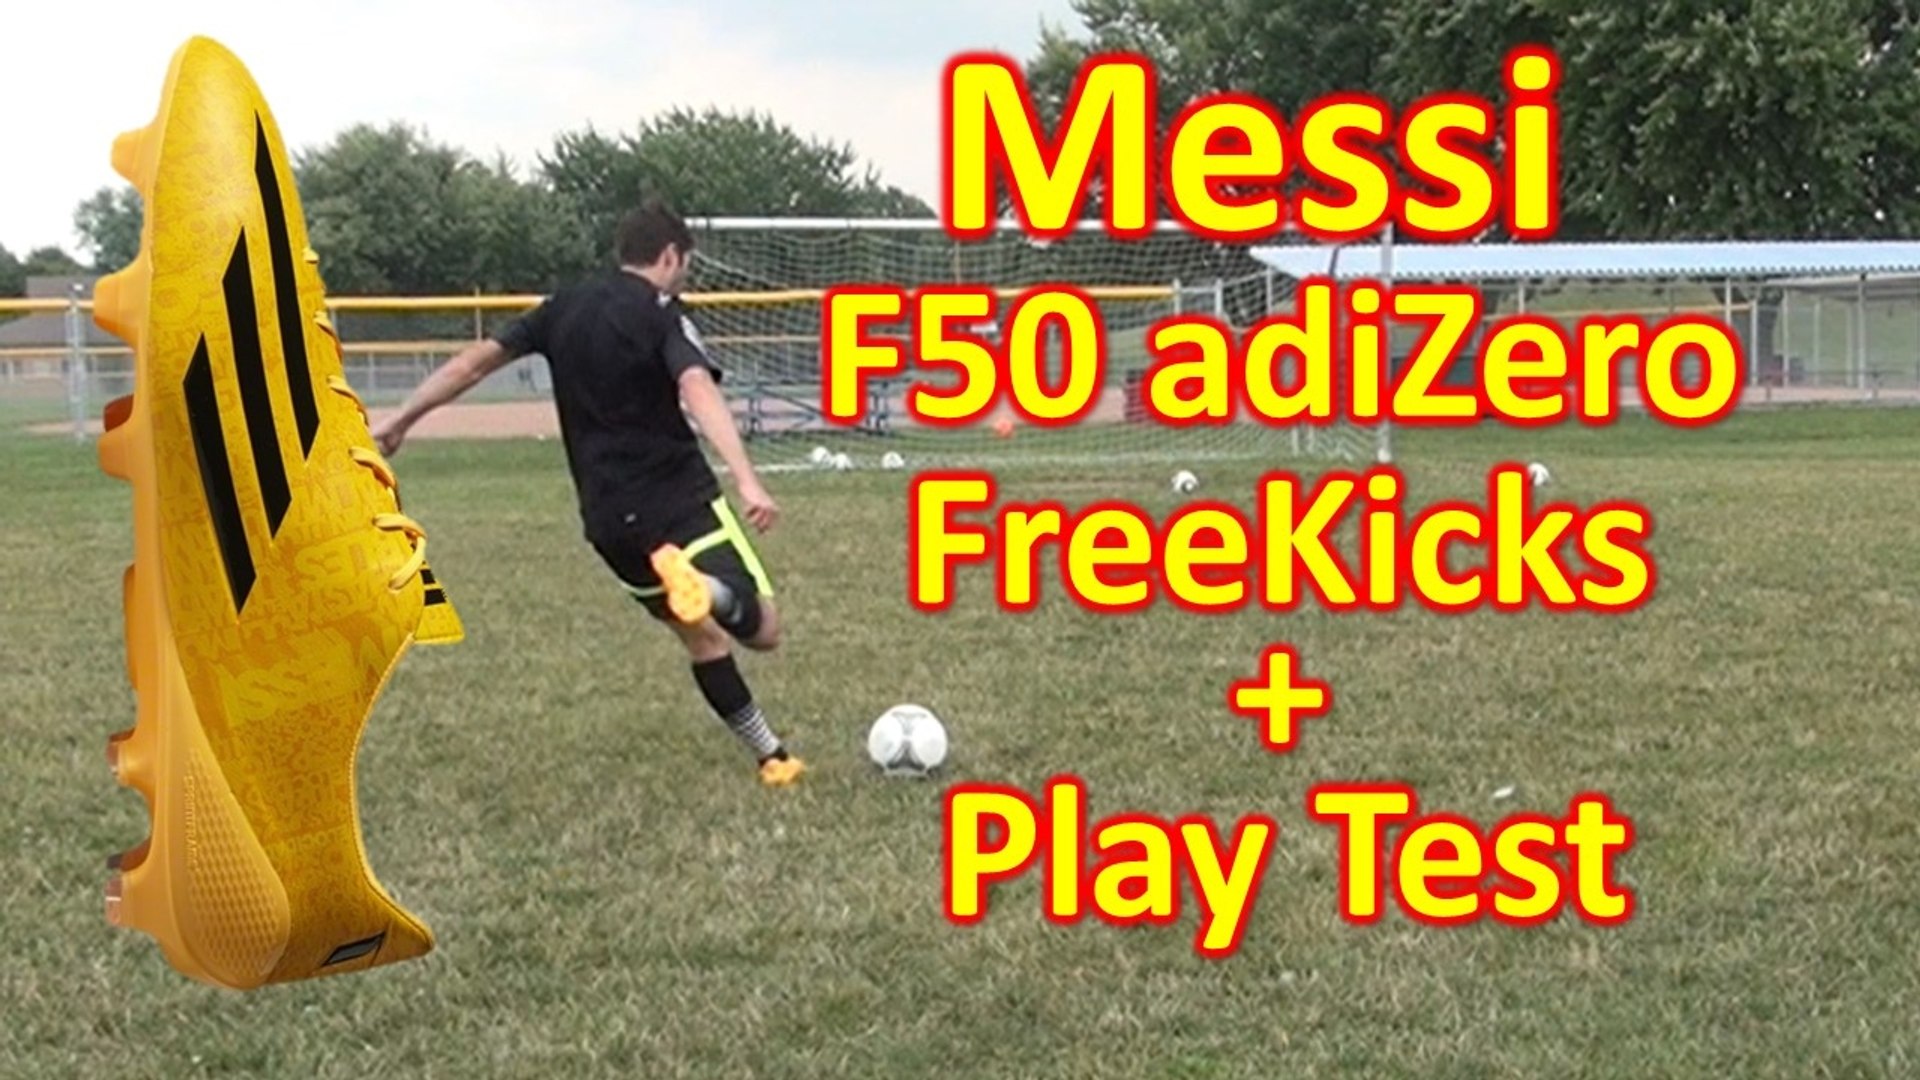 Messi adidas F50 adiZero 2014 Review + Freekicks & Play Test - video  Dailymotion